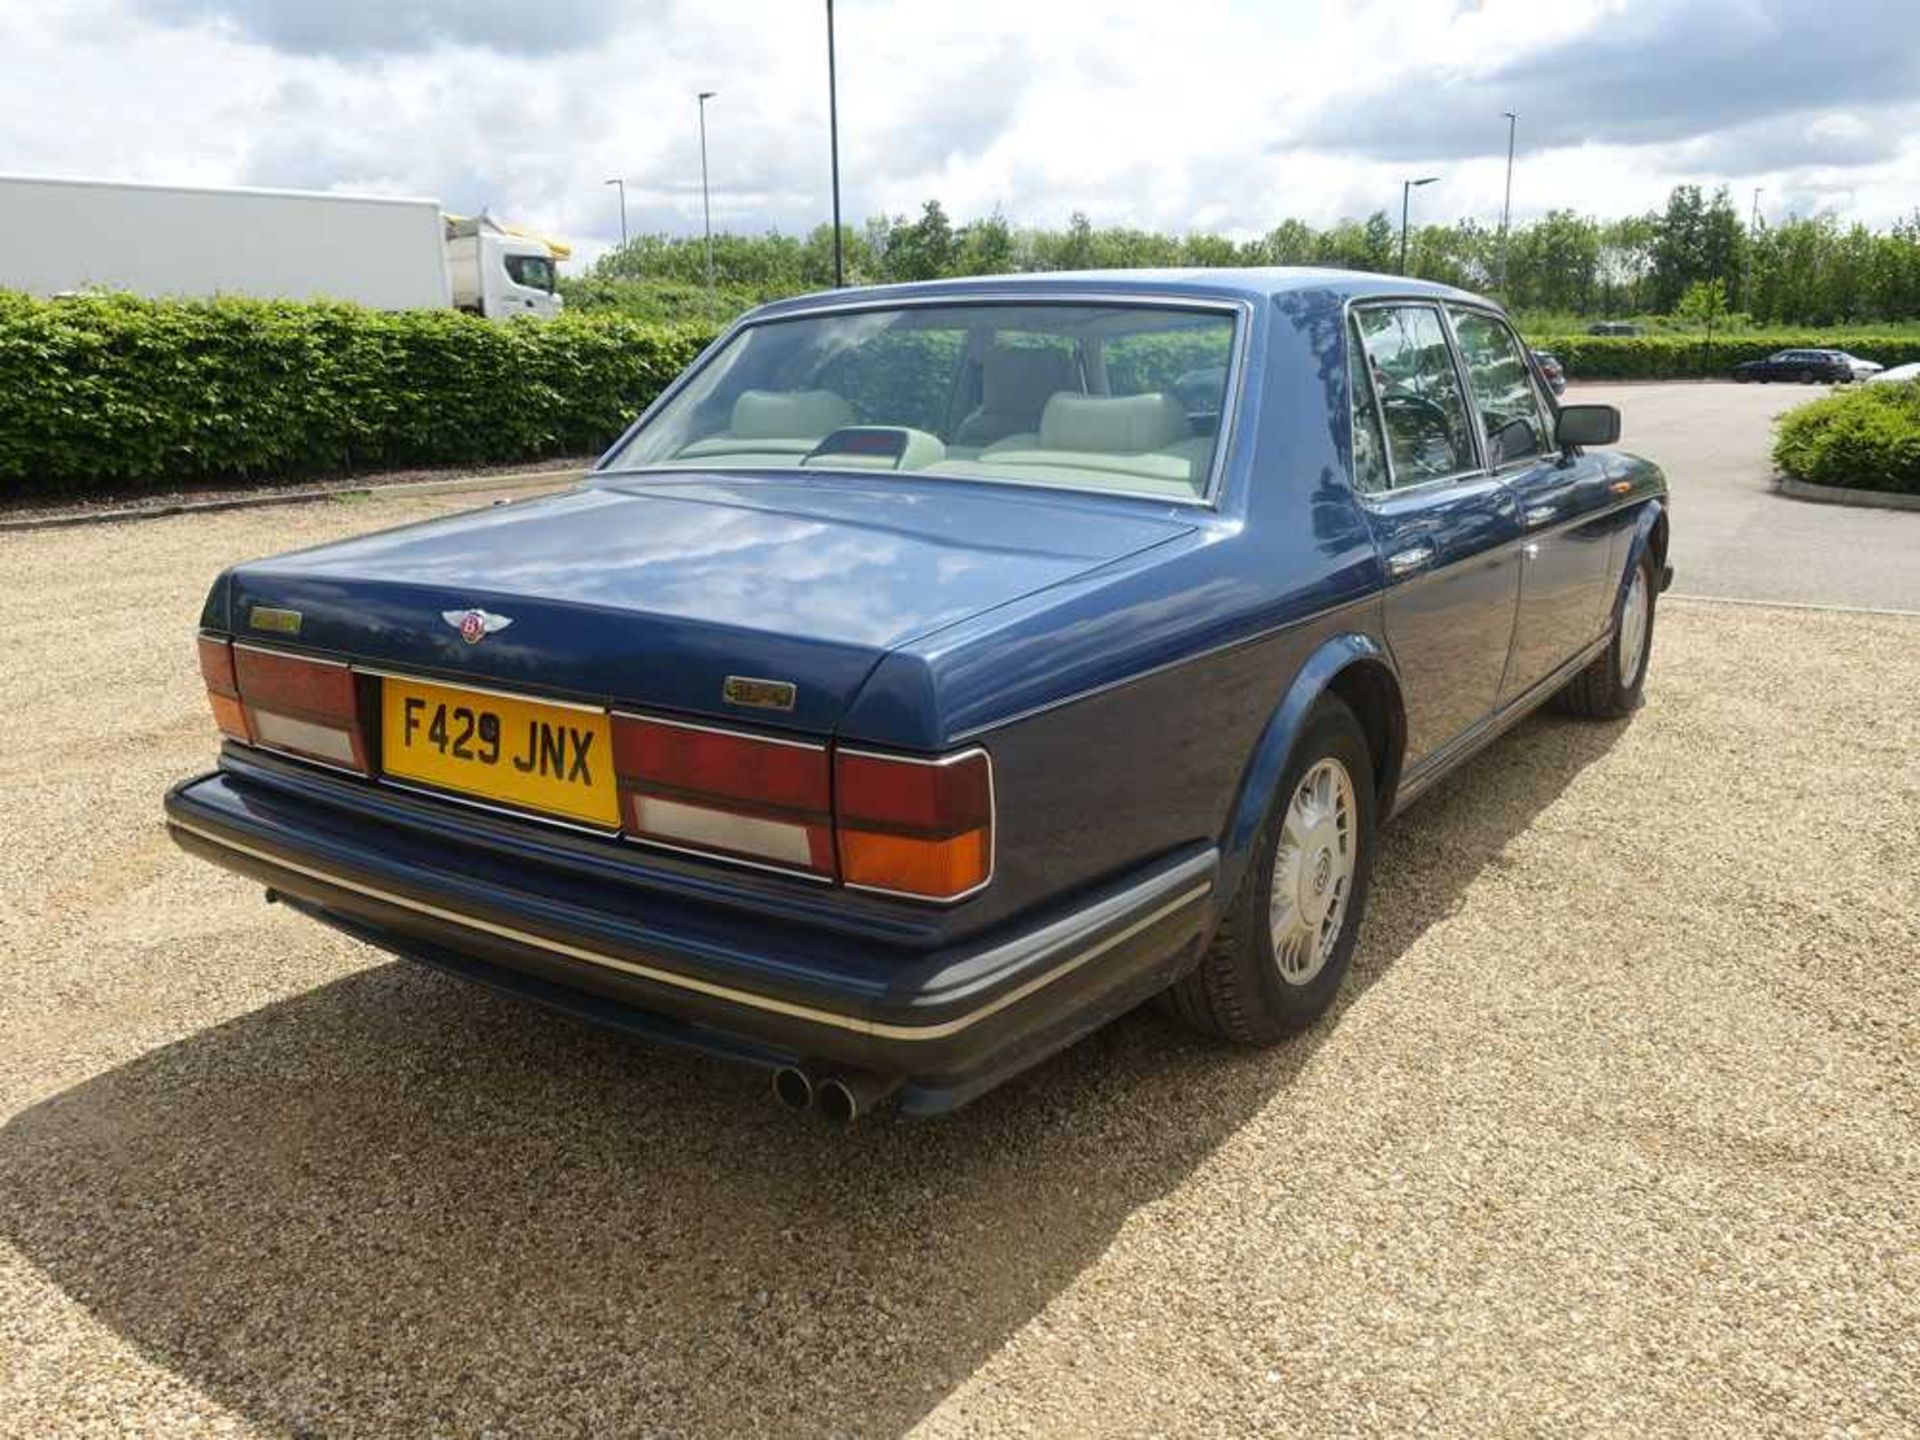 1989 (F registration) Bentley Turbo R 6750cc V8 automatic 4 door saloon in blue, registration F429 - Image 8 of 20